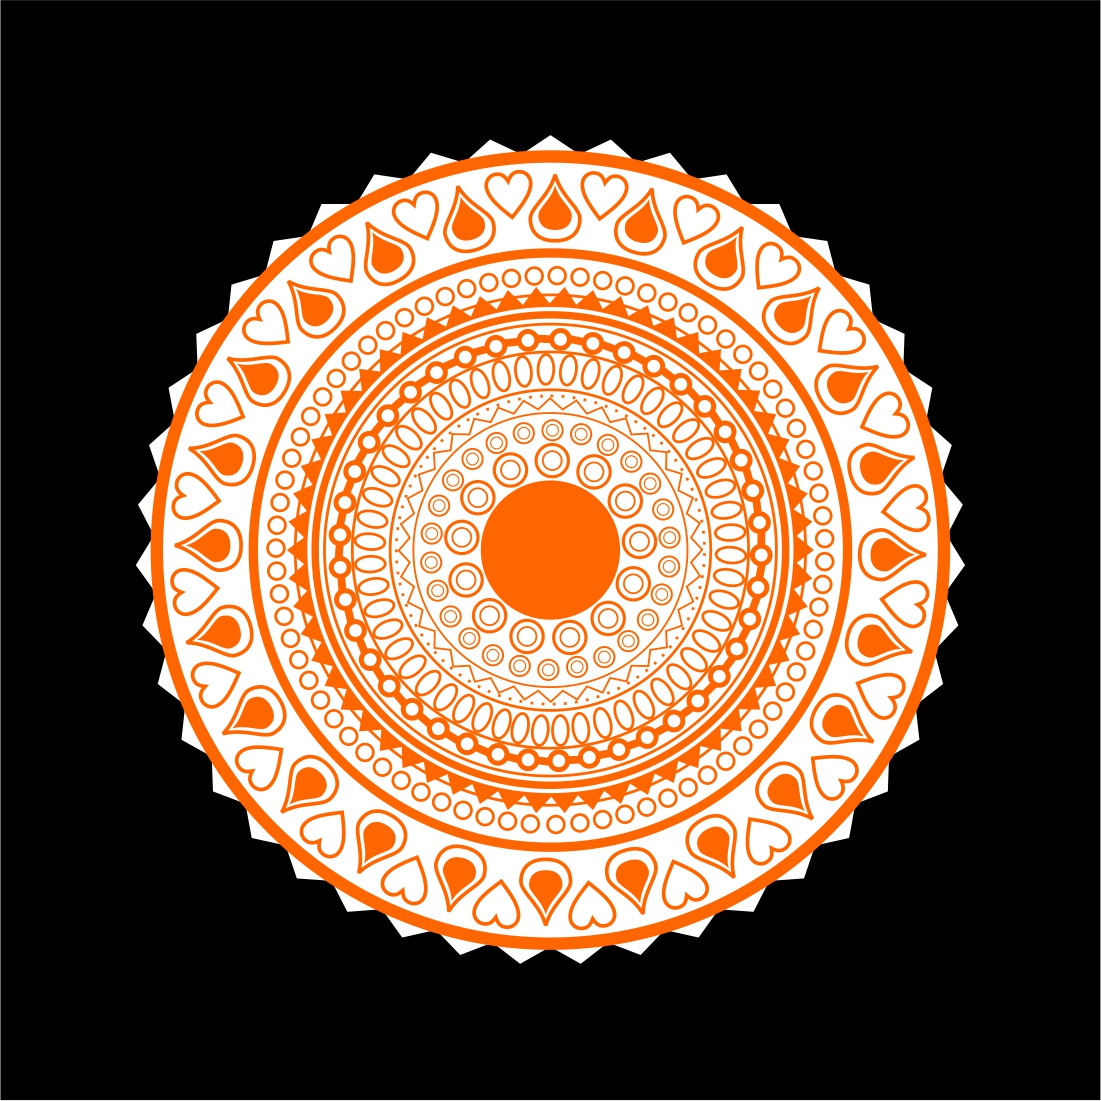 Orange and white circular design on a black background.